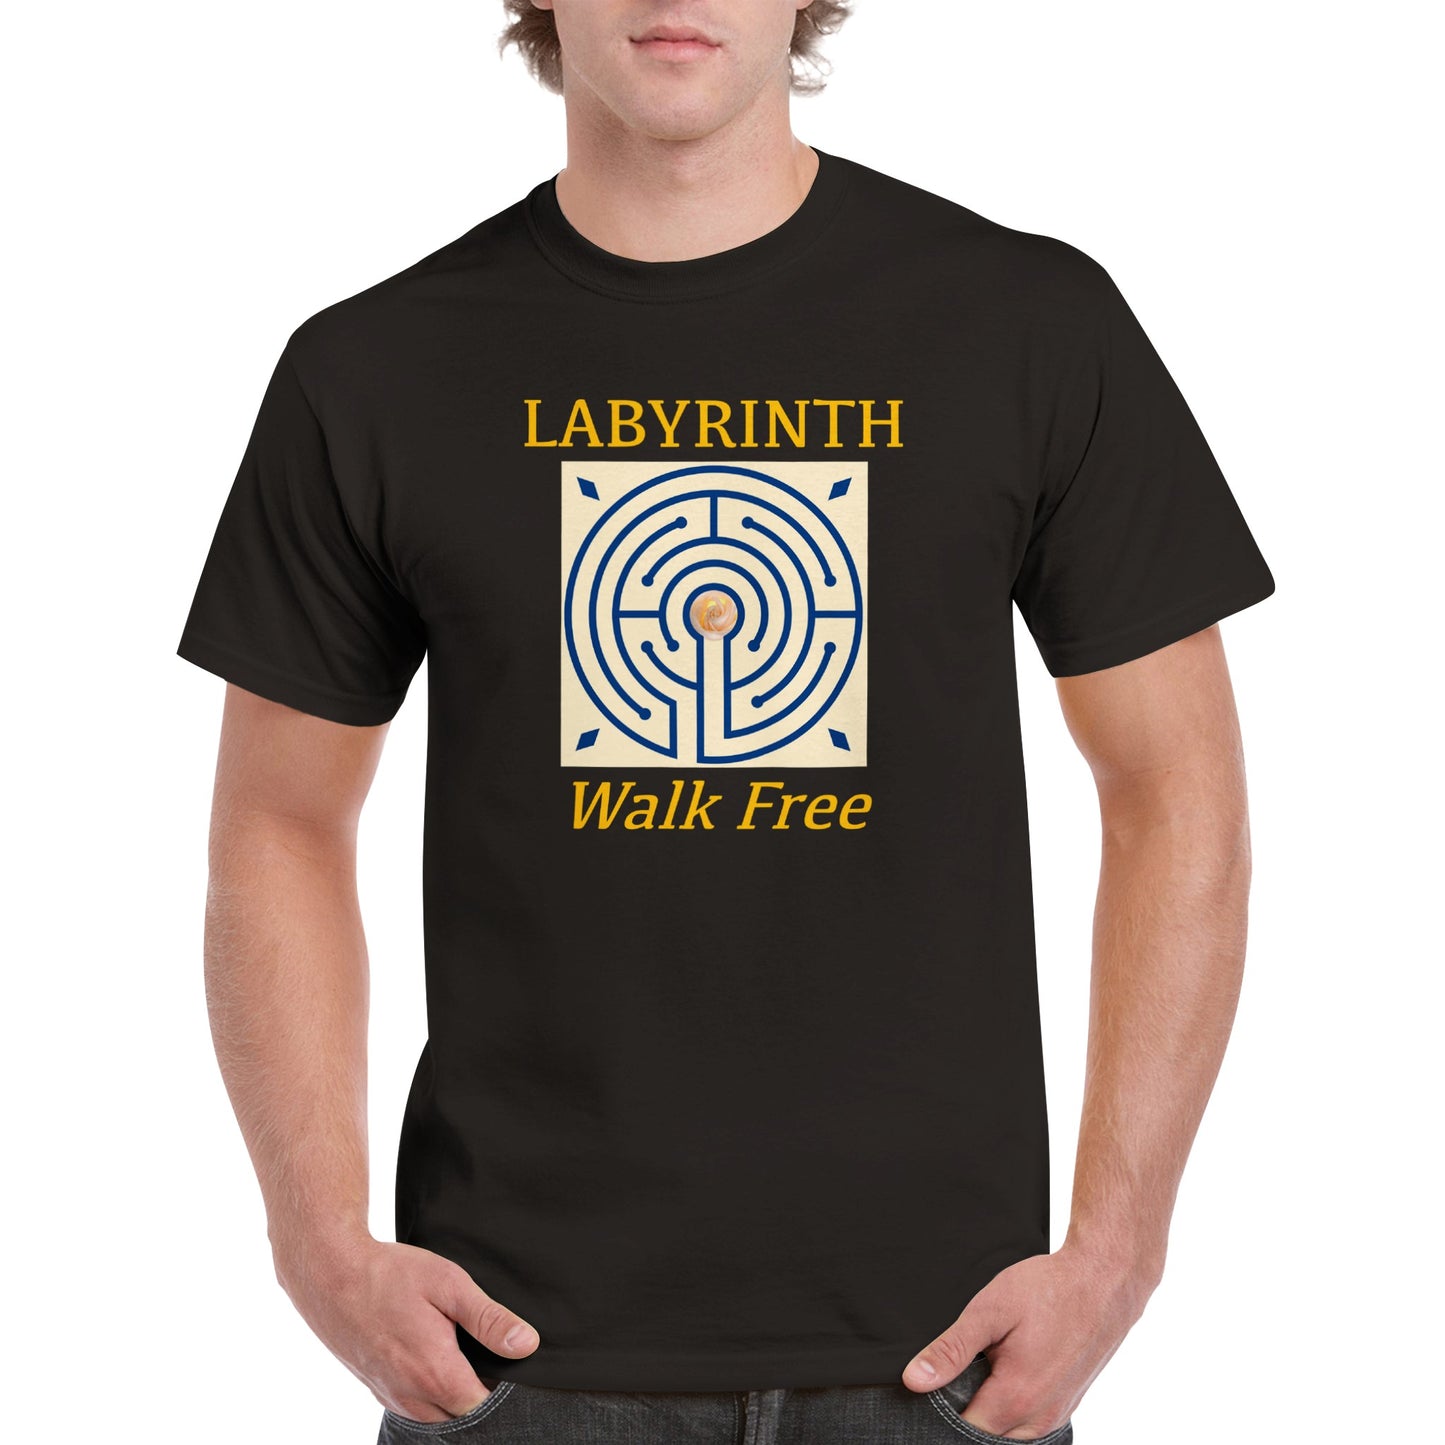 Labyrinth Walk Free V2 Heavyweight Unisex Crewneck T-shirt